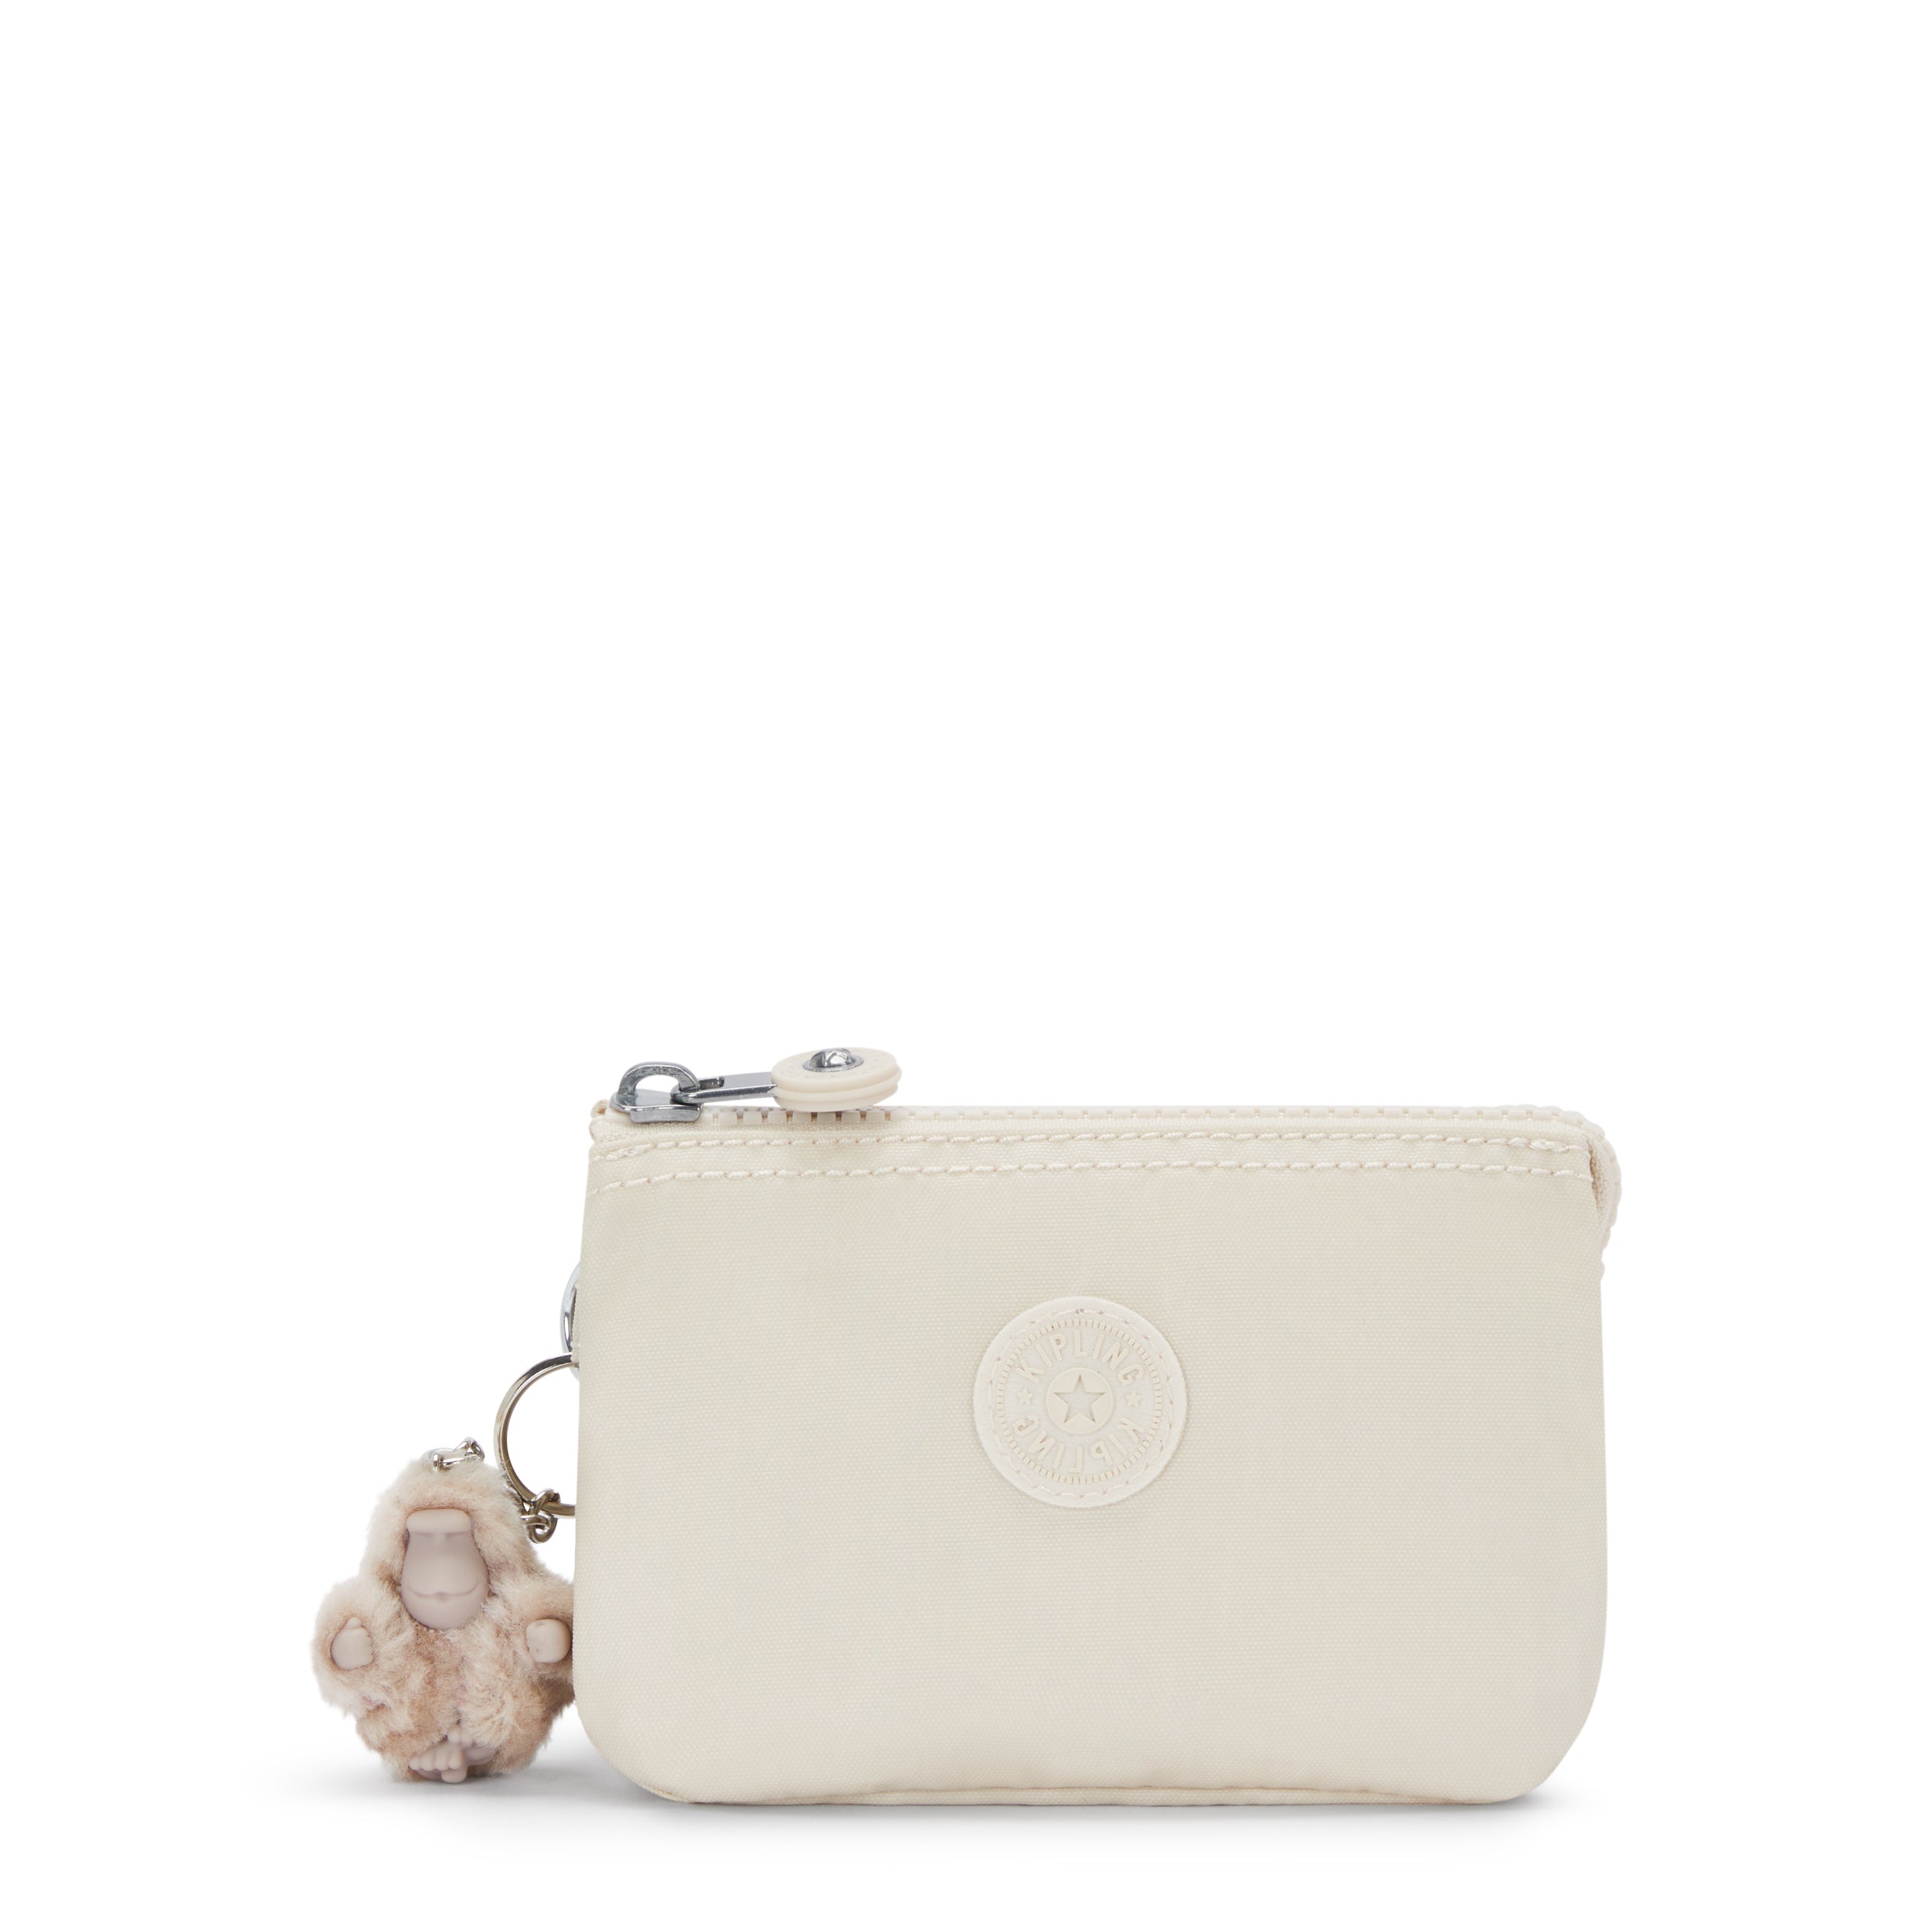 KIPLING-Creativity S-Small purse-Beige Pearl-15205-3KA